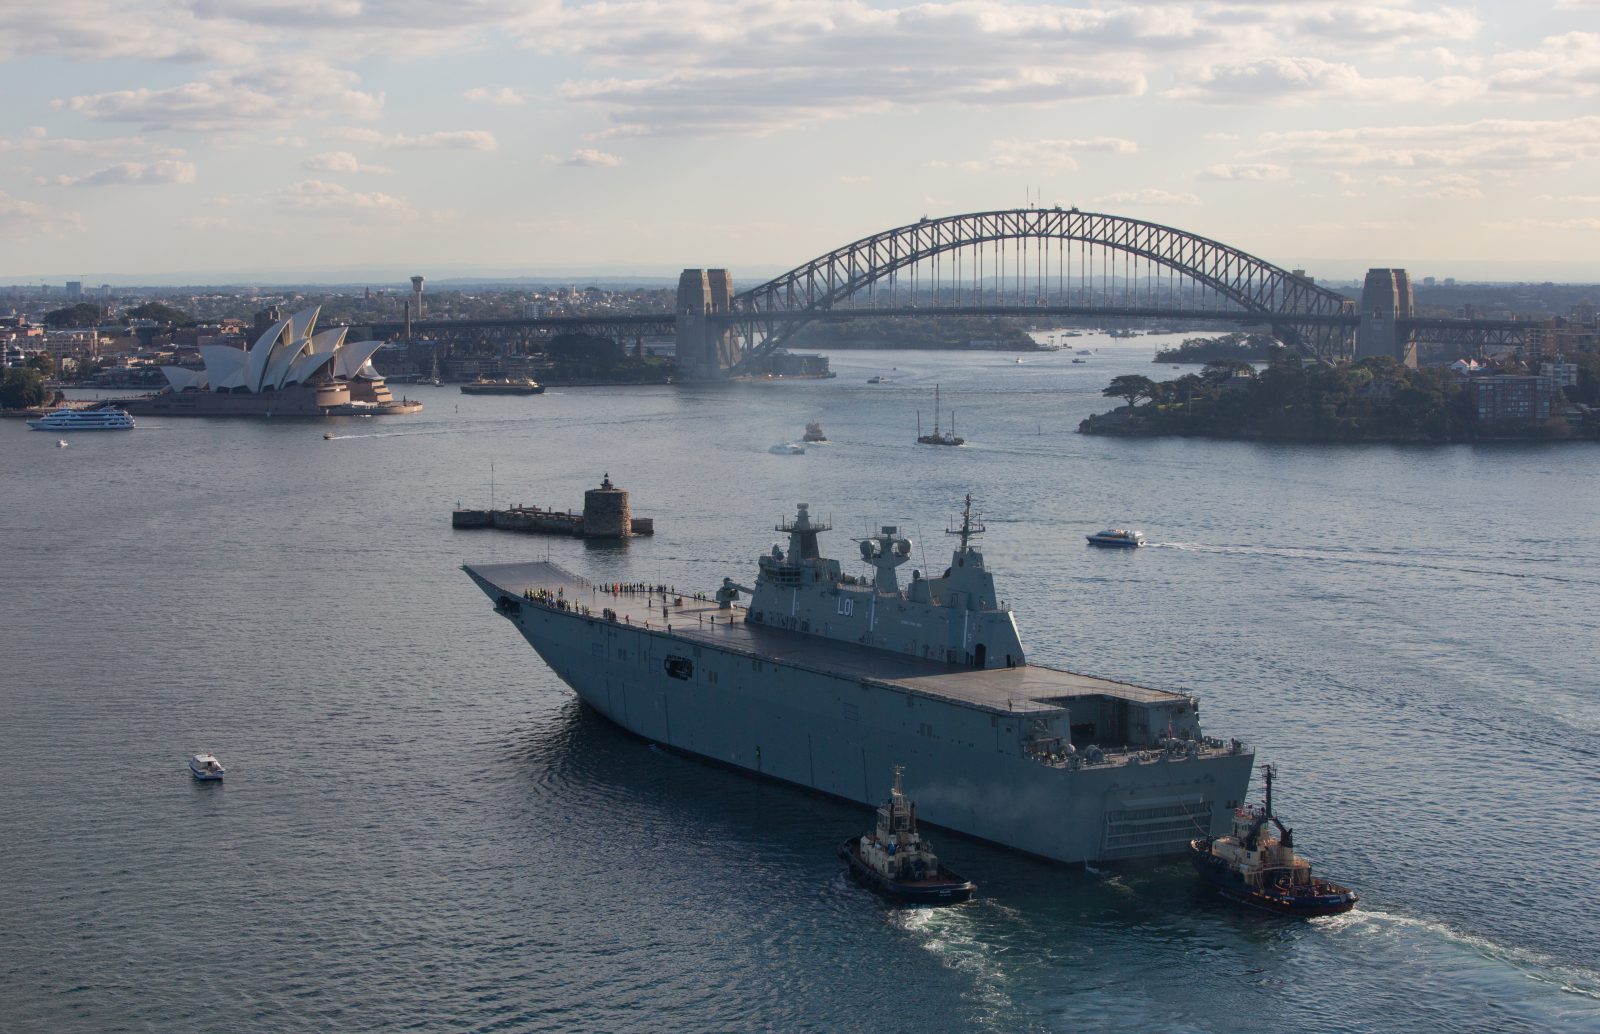 NUSHIP Adelaide enters Sydney Harbour